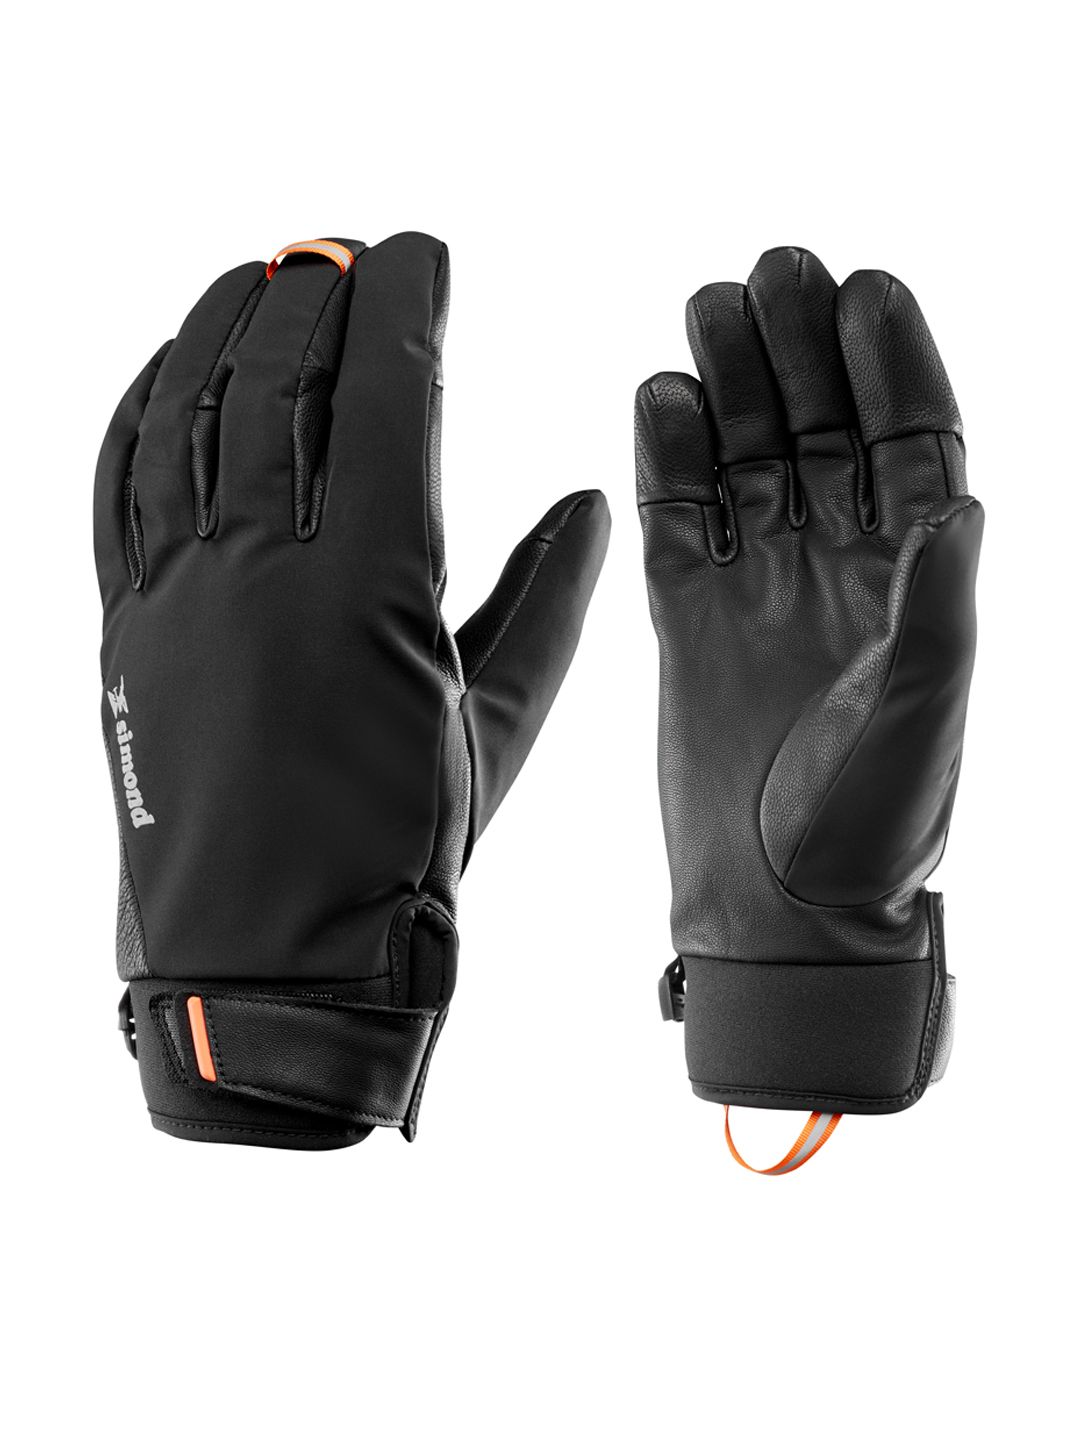 Simond By Decathlon Black Mountaineering Waterproof Gloves Price in India